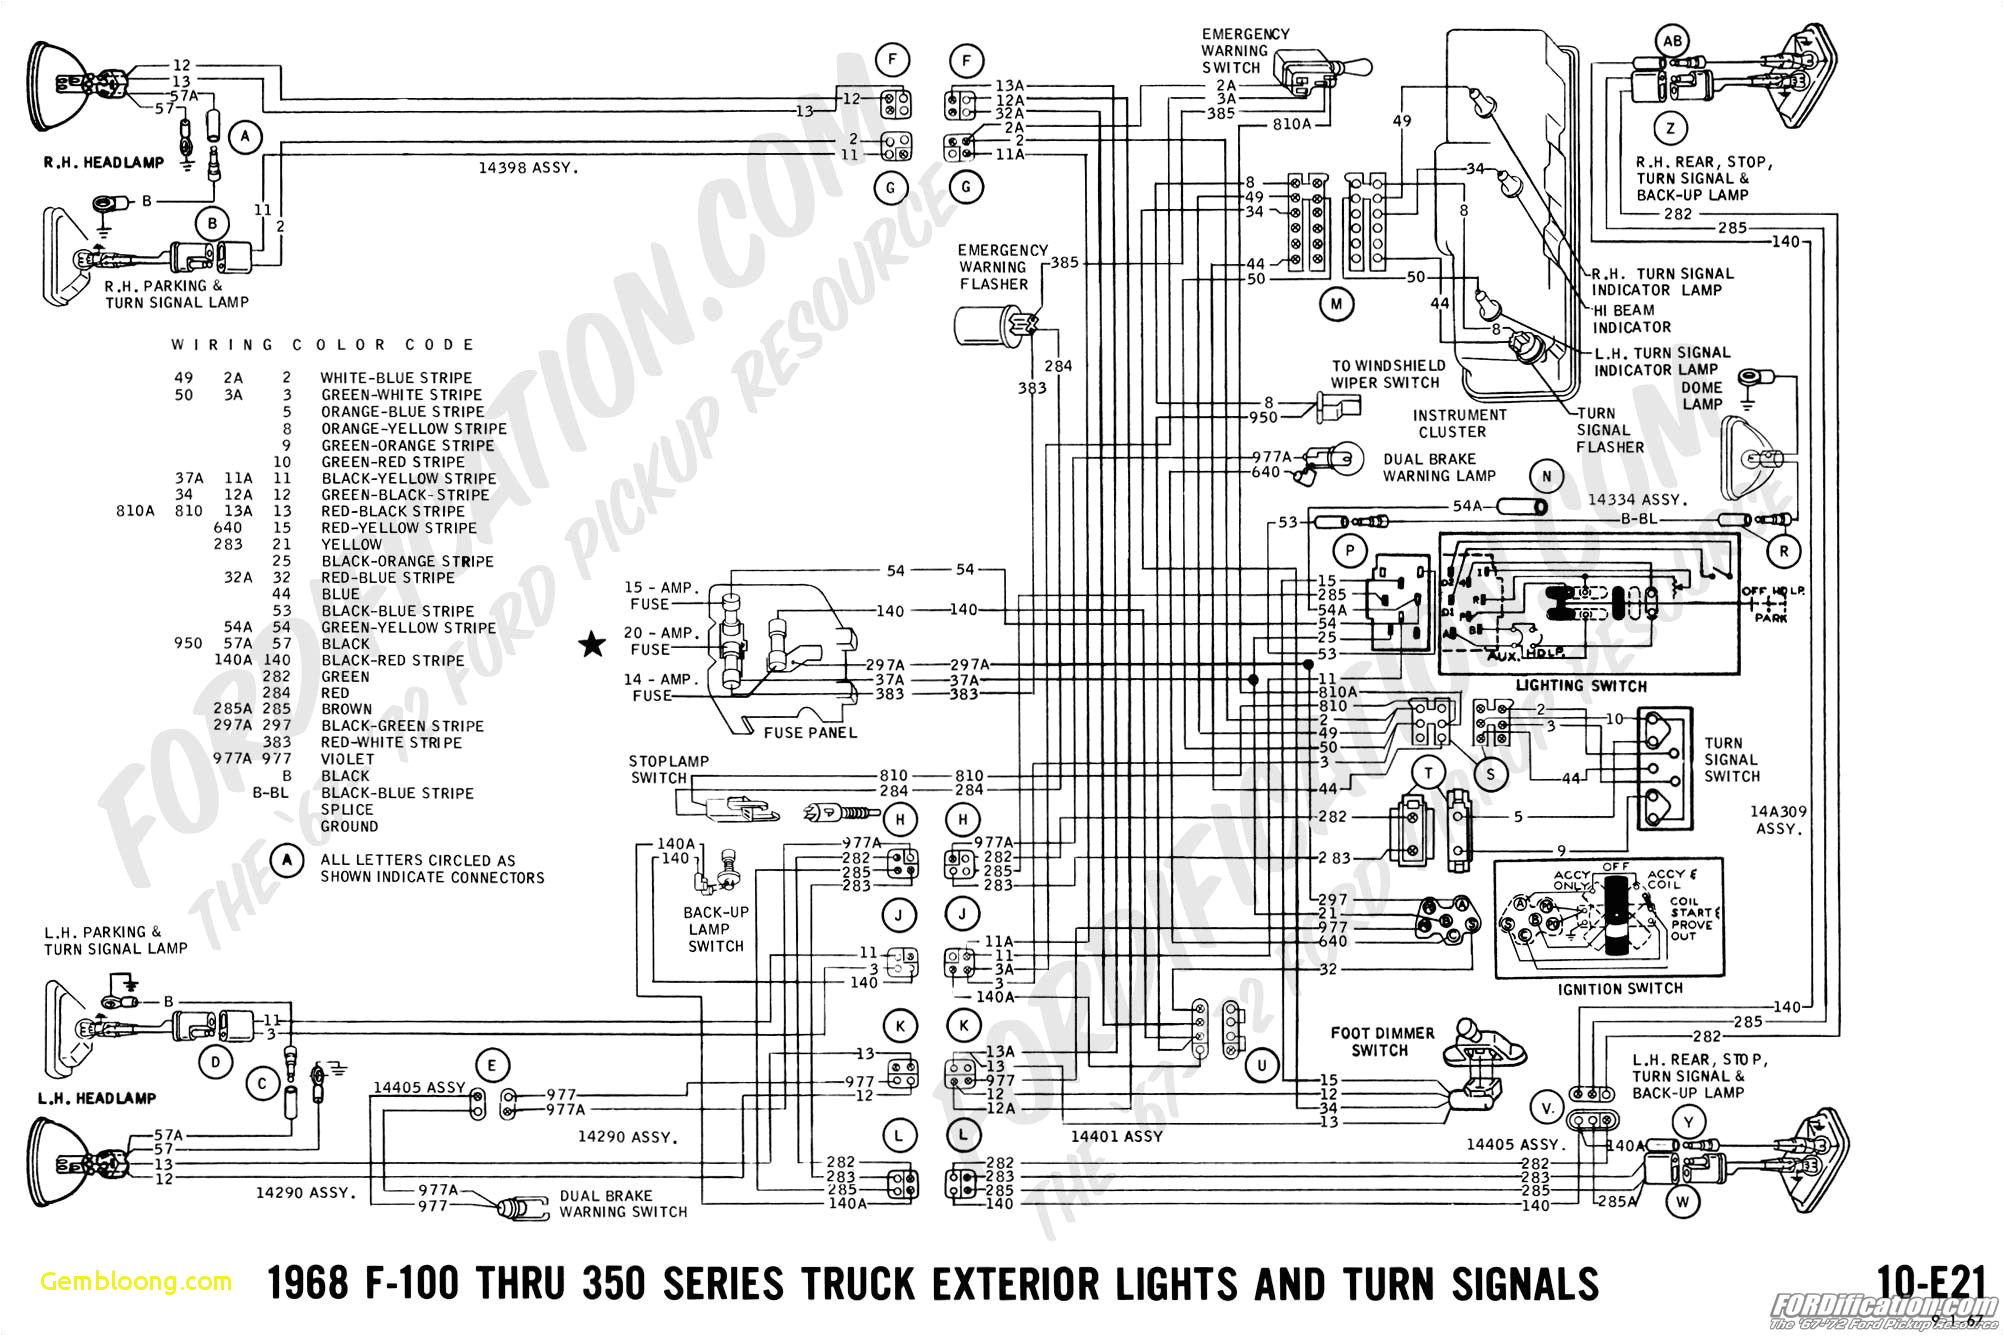 Ford Wiring Diagrams 10 ford Trucks Wiring Diagrams Free Wiring Diagram